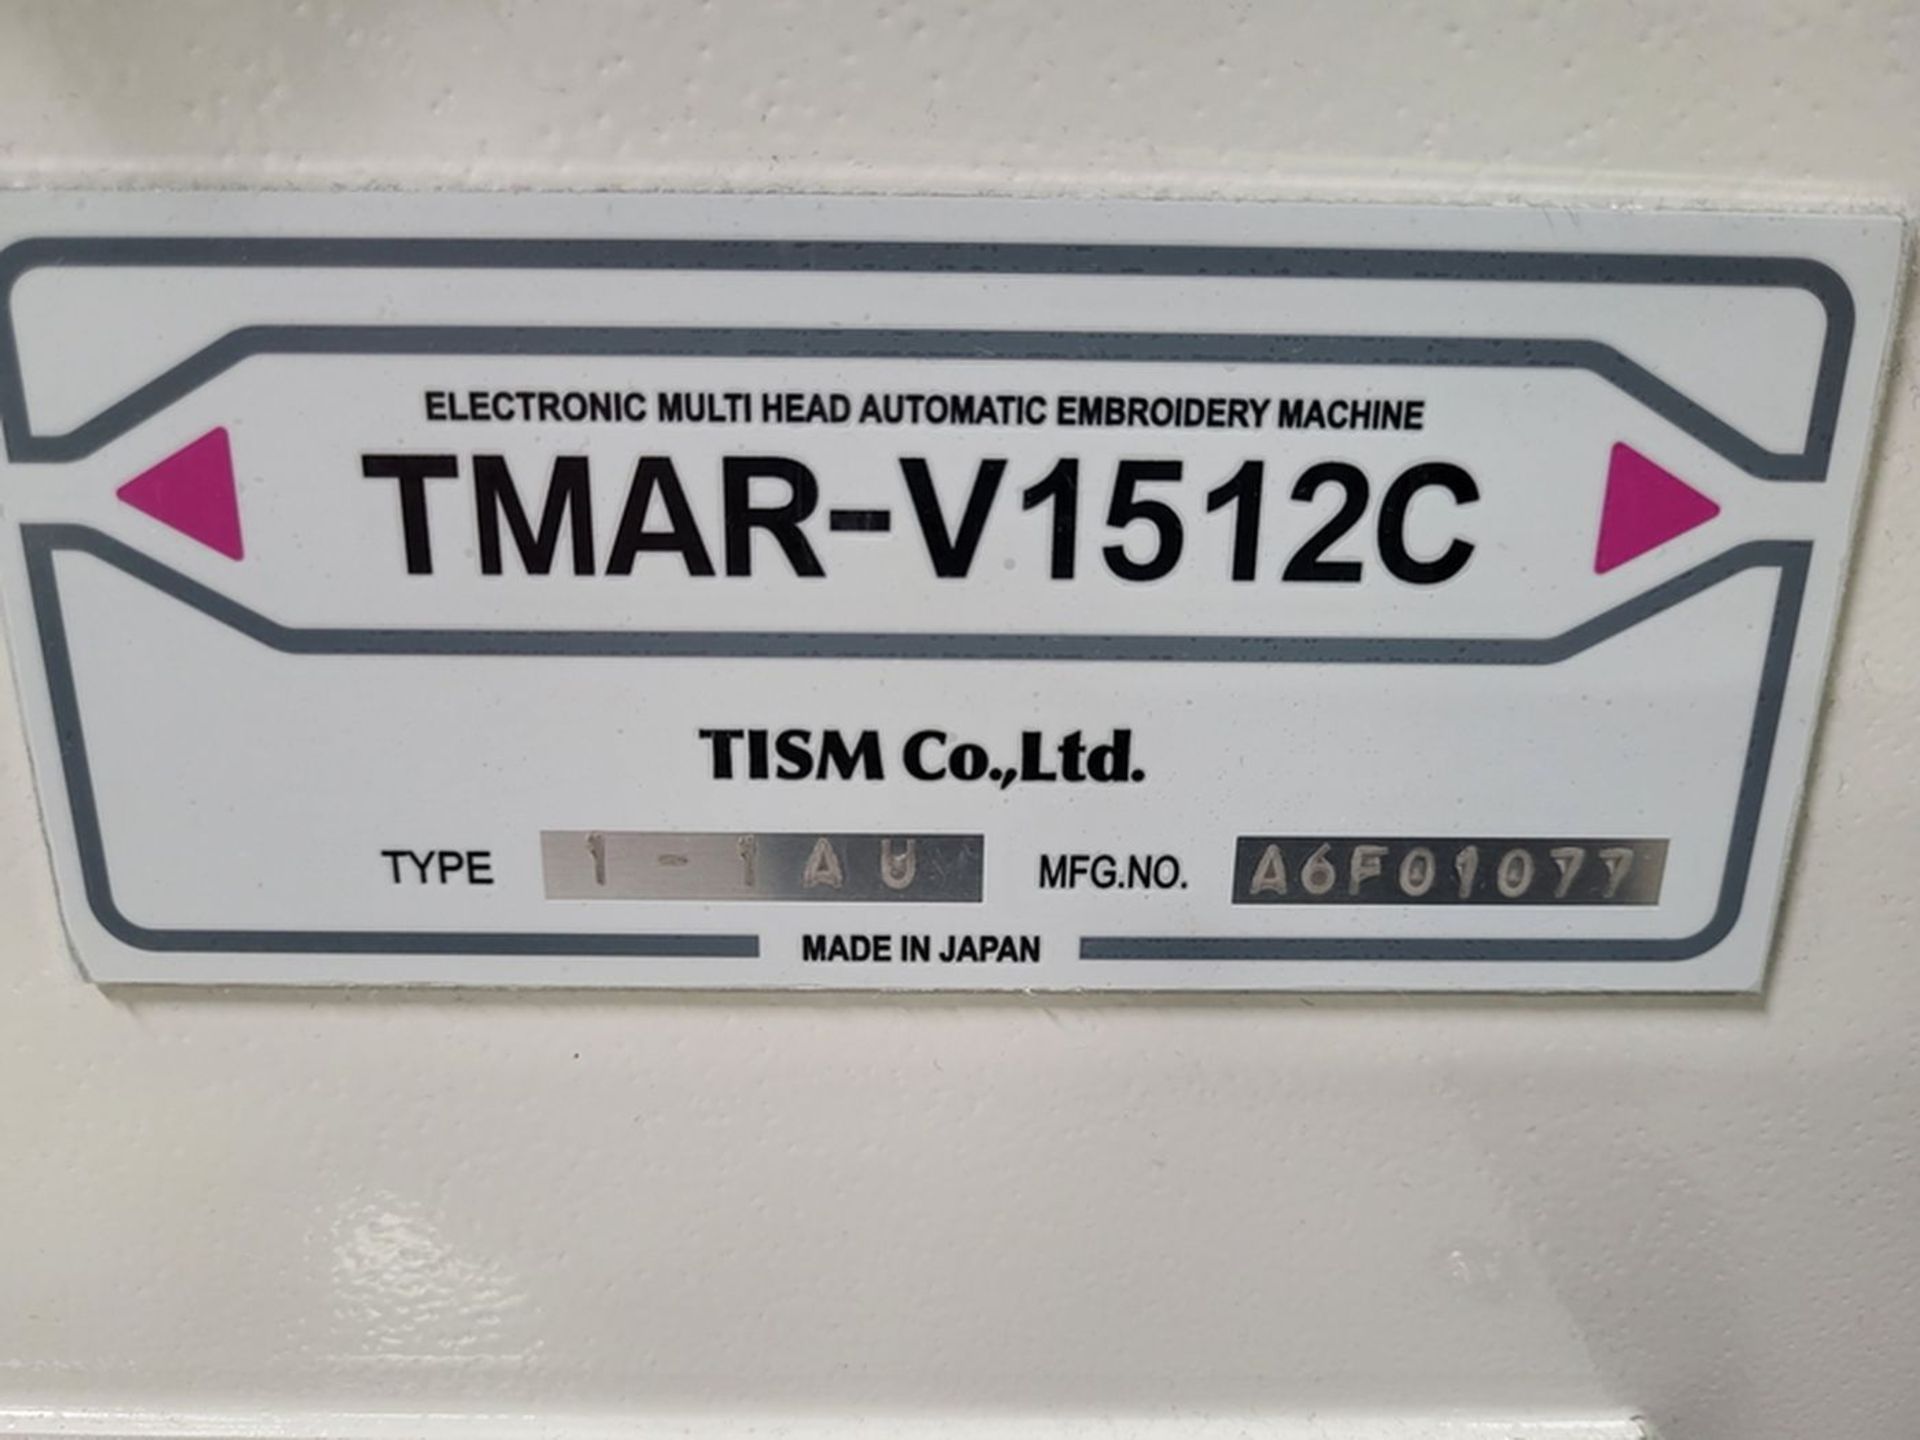 Tajima Model TMAR-V1512C 15-Needle 12-Multicolor Heads Type 1-1AU Embroidery Machine, S/N: - Image 5 of 5